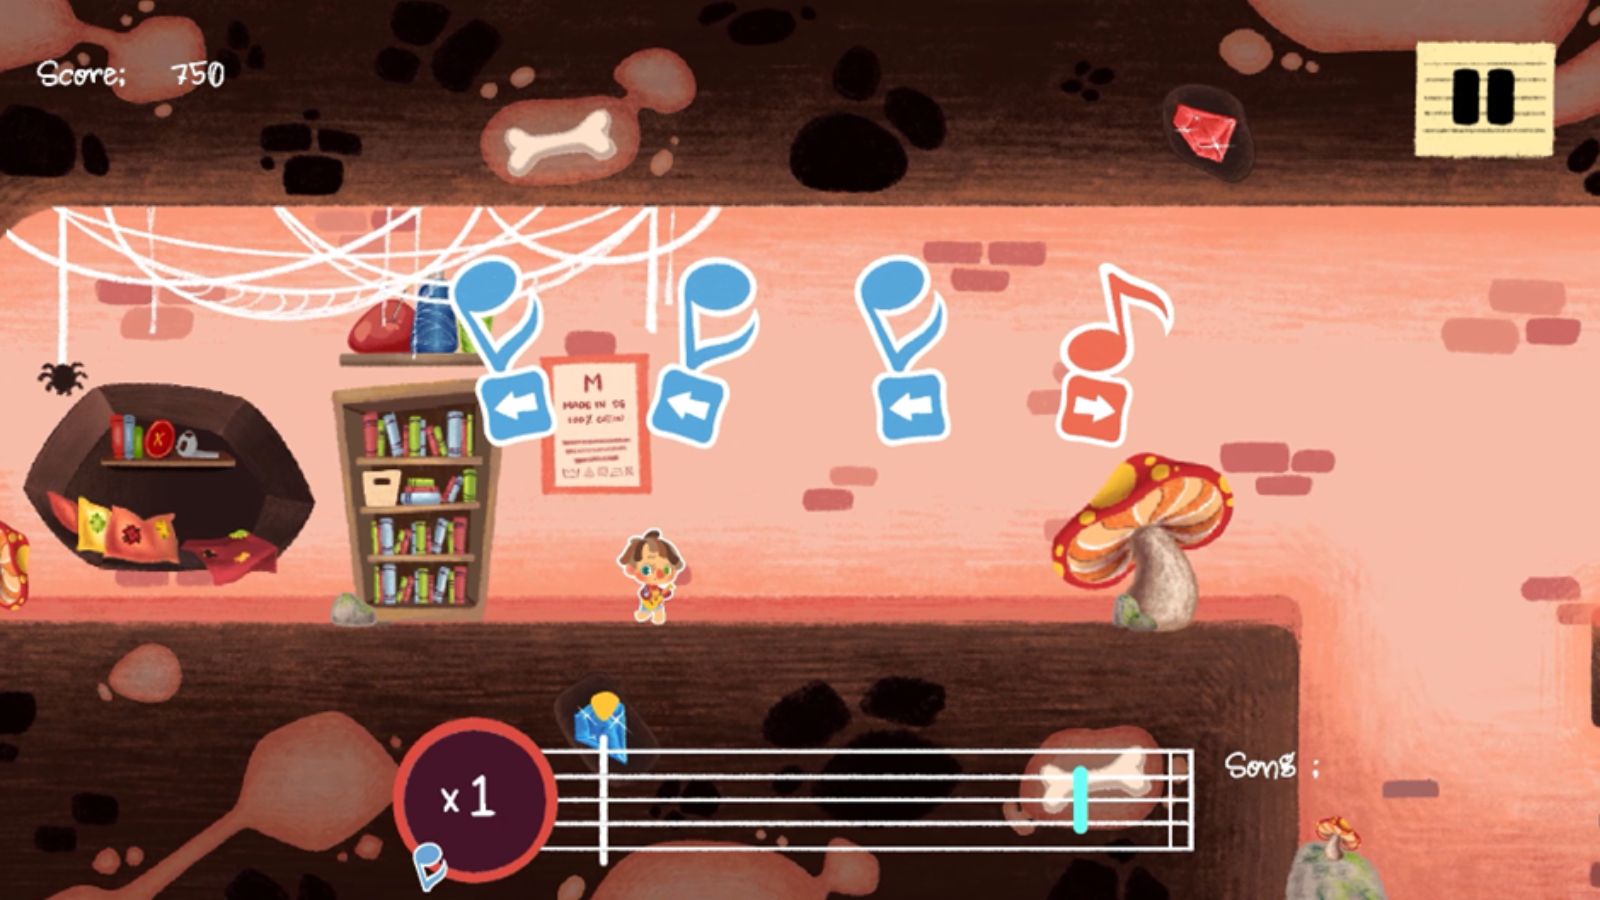 The protagonist, Brio, walks forward while holding a guitar. 